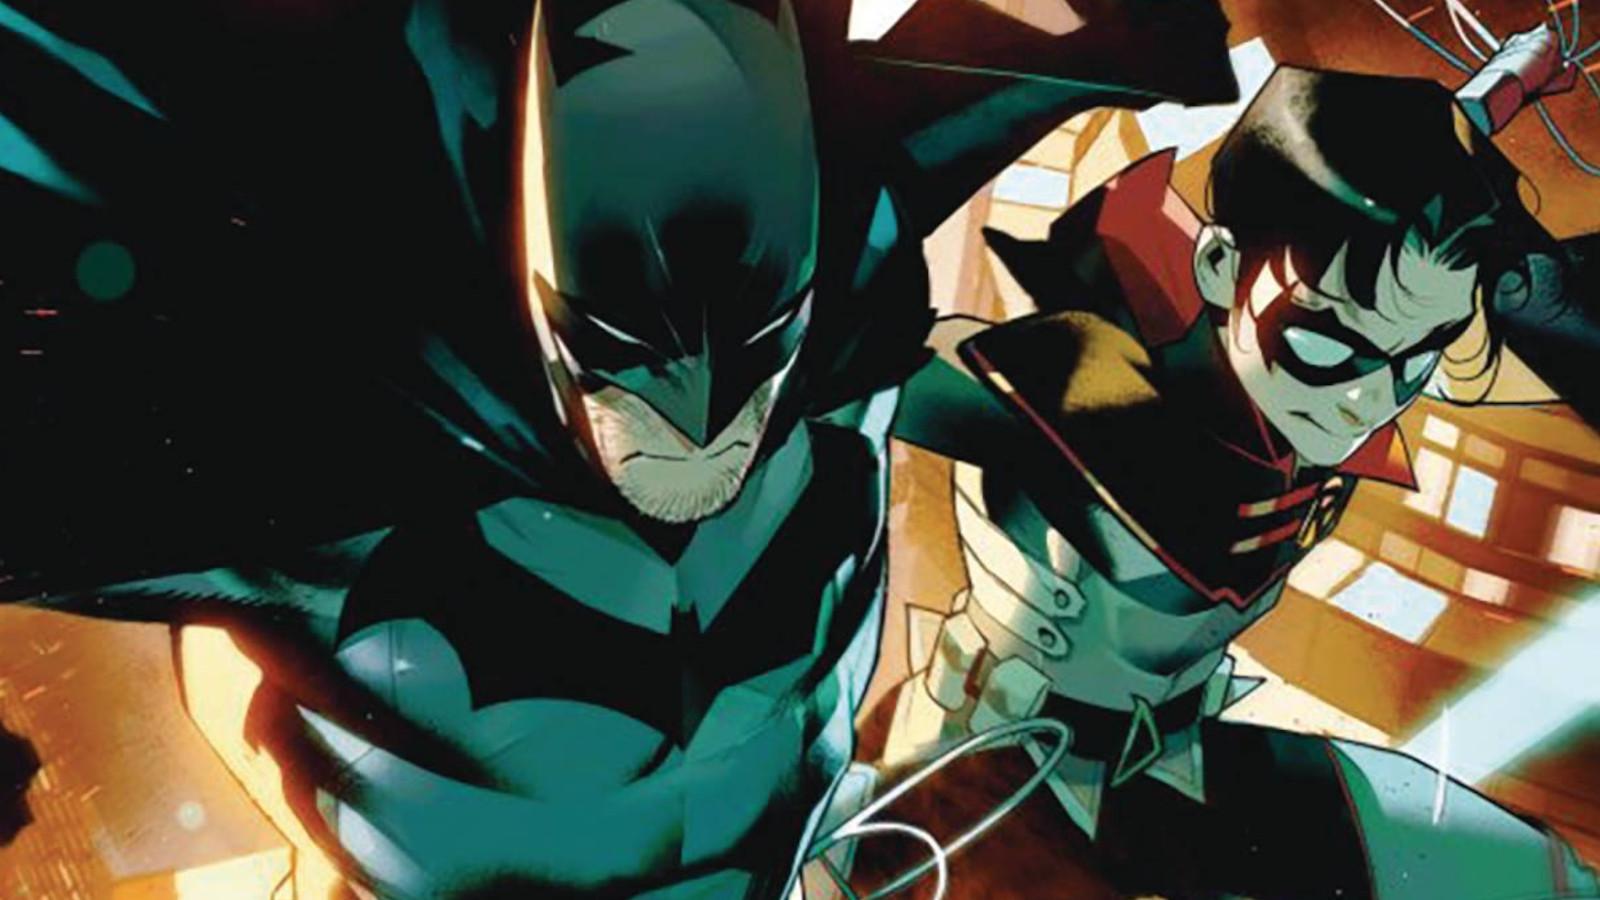 Batman and Robin #1 cover art